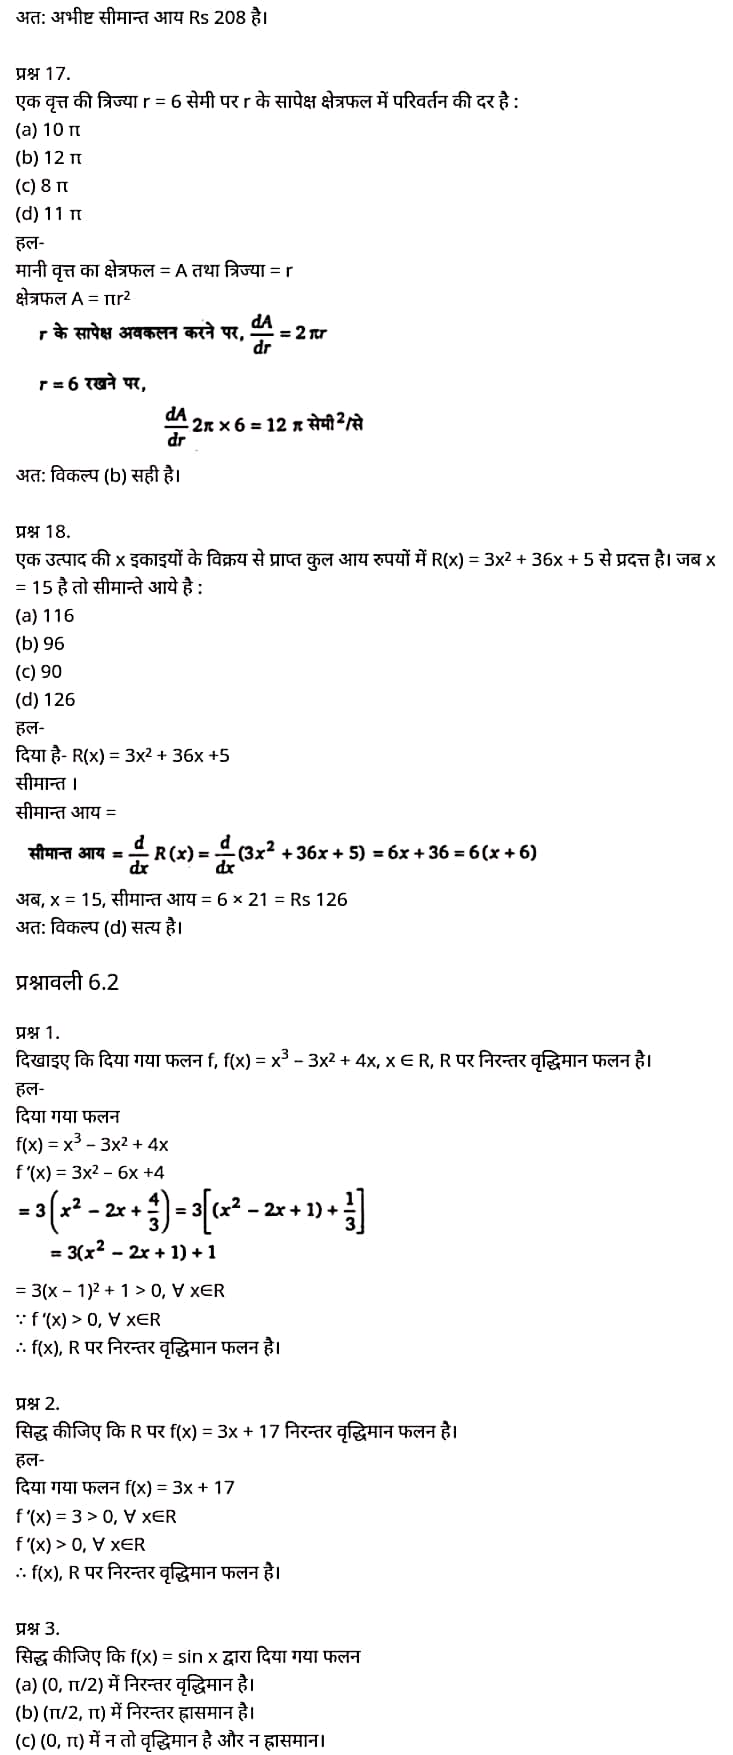 "Class 12 Maths Chapter 6", "Application of Derivatives", Hindi Medium,  मैथ्स कक्षा 12 नोट्स pdf,  मैथ्स कक्षा 12 नोट्स 2020 NCERT,  मैथ्स कक्षा 12 PDF,  मैथ्स पुस्तक,  मैथ्स की बुक,  मैथ्स प्रश्नोत्तरी Class 12, 12 वीं मैथ्स पुस्तक RBSE,  बिहार बोर्ड 12 वीं मैथ्स नोट्स,   12th Maths book in hindi, 12th Maths notes in hindi, cbse books for class 12, cbse books in hindi, cbse ncert books, class 12 Maths notes in hindi,  class 12 hindi ncert solutions, Maths 2020, Maths 2021, Maths 2022, Maths book class 12, Maths book in hindi, Maths class 12 in hindi, Maths notes for class 12 up board in hindi, ncert all books, ncert app in hindi, ncert book solution, ncert books class 10, ncert books class 12, ncert books for class 7, ncert books for upsc in hindi, ncert books in hindi class 10, ncert books in hindi for class 12 Maths, ncert books in hindi for class 6, ncert books in hindi pdf, ncert class 12 hindi book, ncert english book, ncert Maths book in hindi, ncert Maths books in hindi pdf, ncert Maths class 12, ncert in hindi,  old ncert books in hindi, online ncert books in hindi,  up board 12th, up board 12th syllabus, up board class 10 hindi book, up board class 12 books, up board class 12 new syllabus, up Board Maths 2020, up Board Maths 2021, up Board Maths 2022, up Board Maths 2023, up board intermediate Maths syllabus, up board intermediate syllabus 2021, Up board Master 2021, up board model paper 2021, up board model paper all subject, up board new syllabus of class 12th Maths, up board paper 2021, Up board syllabus 2021, UP board syllabus 2022, 12 वीं मैथ्स पुस्तक हिंदी में, 12 वीं मैथ्स नोट्स हिंदी में, कक्षा 12 के लिए सीबीएससी पुस्तकें, हिंदी में सीबीएससी पुस्तकें, सीबीएससी  पुस्तकें, कक्षा 12 मैथ्स नोट्स हिंदी में, कक्षा 12 हिंदी एनसीईआरटी समाधान, मैथ्स 2020, मैथ्स 2021, मैथ्स 2022, मैथ्स  बुक क्लास 12, मैथ्स बुक इन हिंदी, बायोलॉजी क्लास 12 हिंदी में, मैथ्स नोट्स इन क्लास 12 यूपी  बोर्ड इन हिंदी, एनसीईआरटी मैथ्स की किताब हिंदी में,  बोर्ड 12 वीं तक, 12 वीं तक की पाठ्यक्रम, बोर्ड कक्षा 10 की हिंदी पुस्तक  , बोर्ड की कक्षा 12 की किताबें, बोर्ड की कक्षा 12 की नई पाठ्यक्रम, बोर्ड मैथ्स 2020, यूपी   बोर्ड मैथ्स 2021, यूपी  बोर्ड मैथ्स 2022, यूपी  बोर्ड मैथ्स 2023, यूपी  बोर्ड इंटरमीडिएट बायोलॉजी सिलेबस, यूपी  बोर्ड इंटरमीडिएट सिलेबस 2021, यूपी  बोर्ड मास्टर 2021, यूपी  बोर्ड मॉडल पेपर 2021, यूपी  मॉडल पेपर सभी विषय, यूपी  बोर्ड न्यू क्लास का सिलेबस  12 वीं मैथ्स, अप बोर्ड पेपर 2021, यूपी बोर्ड सिलेबस 2021, यूपी बोर्ड सिलेबस 2022,